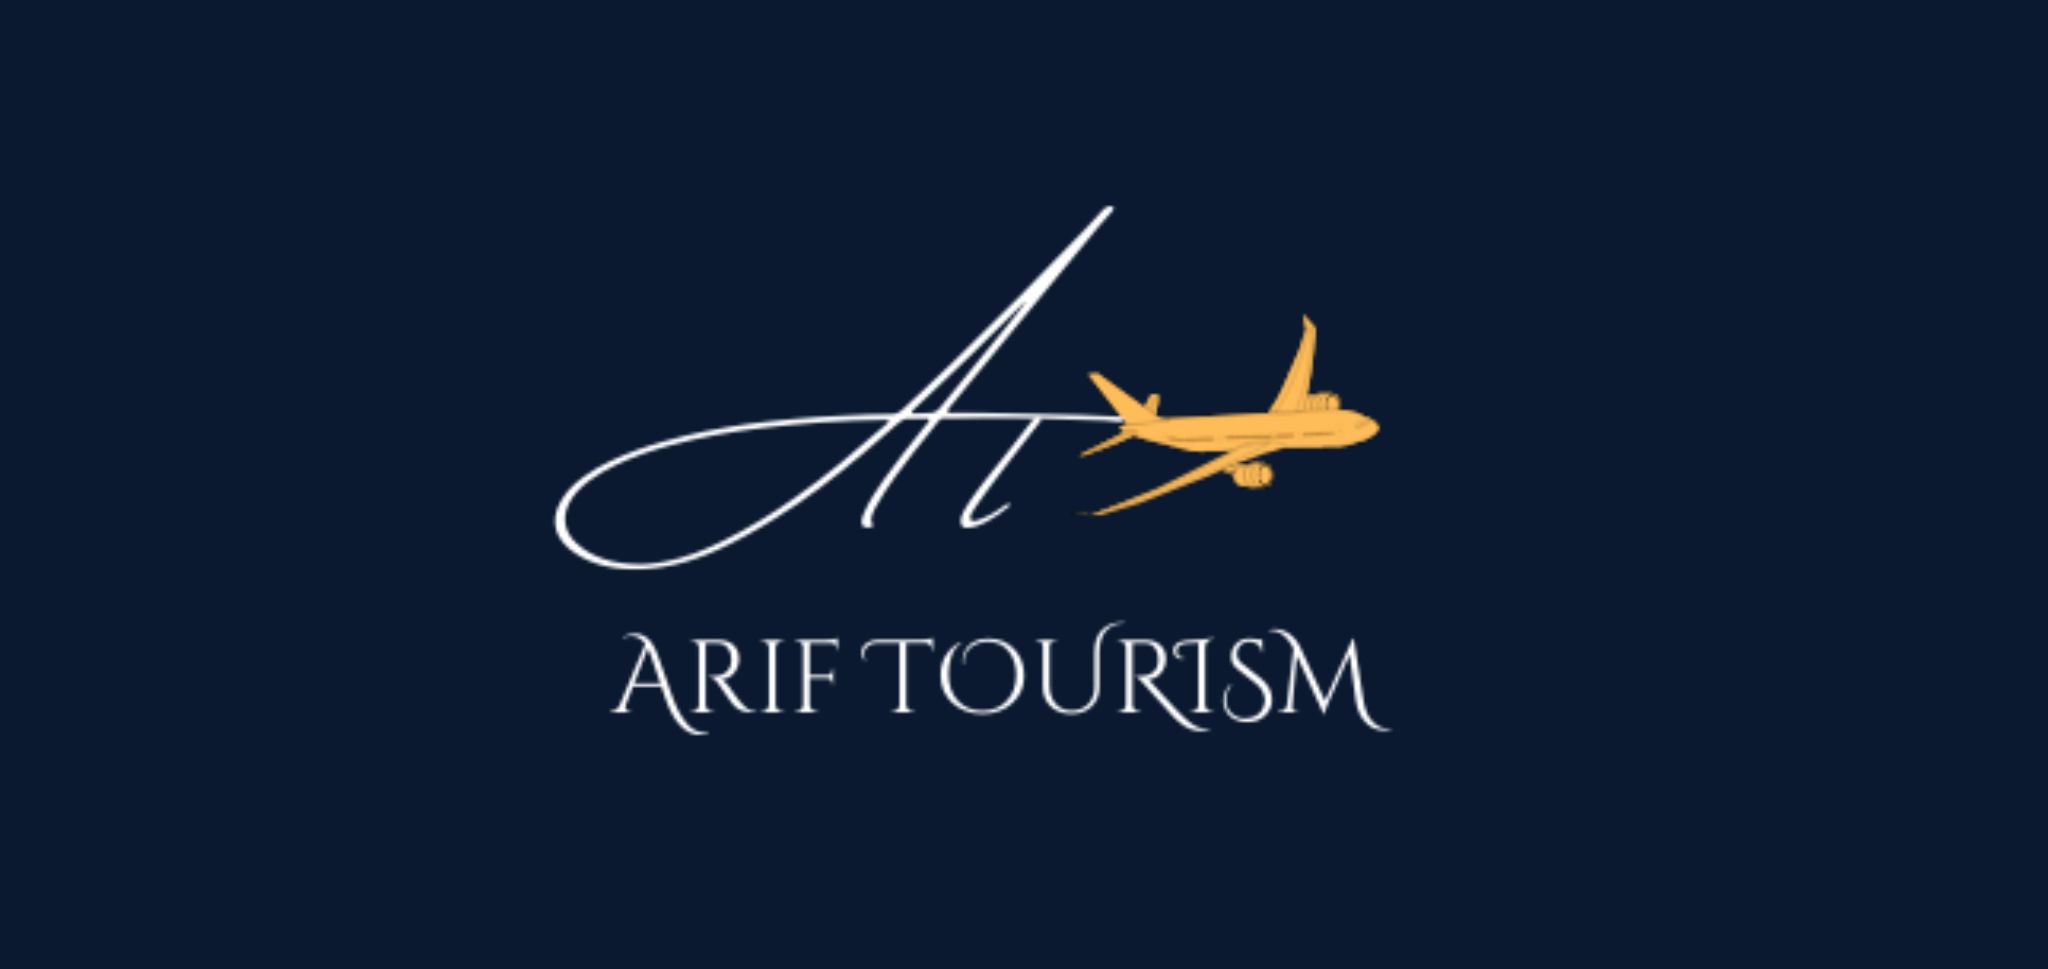 arif tourism